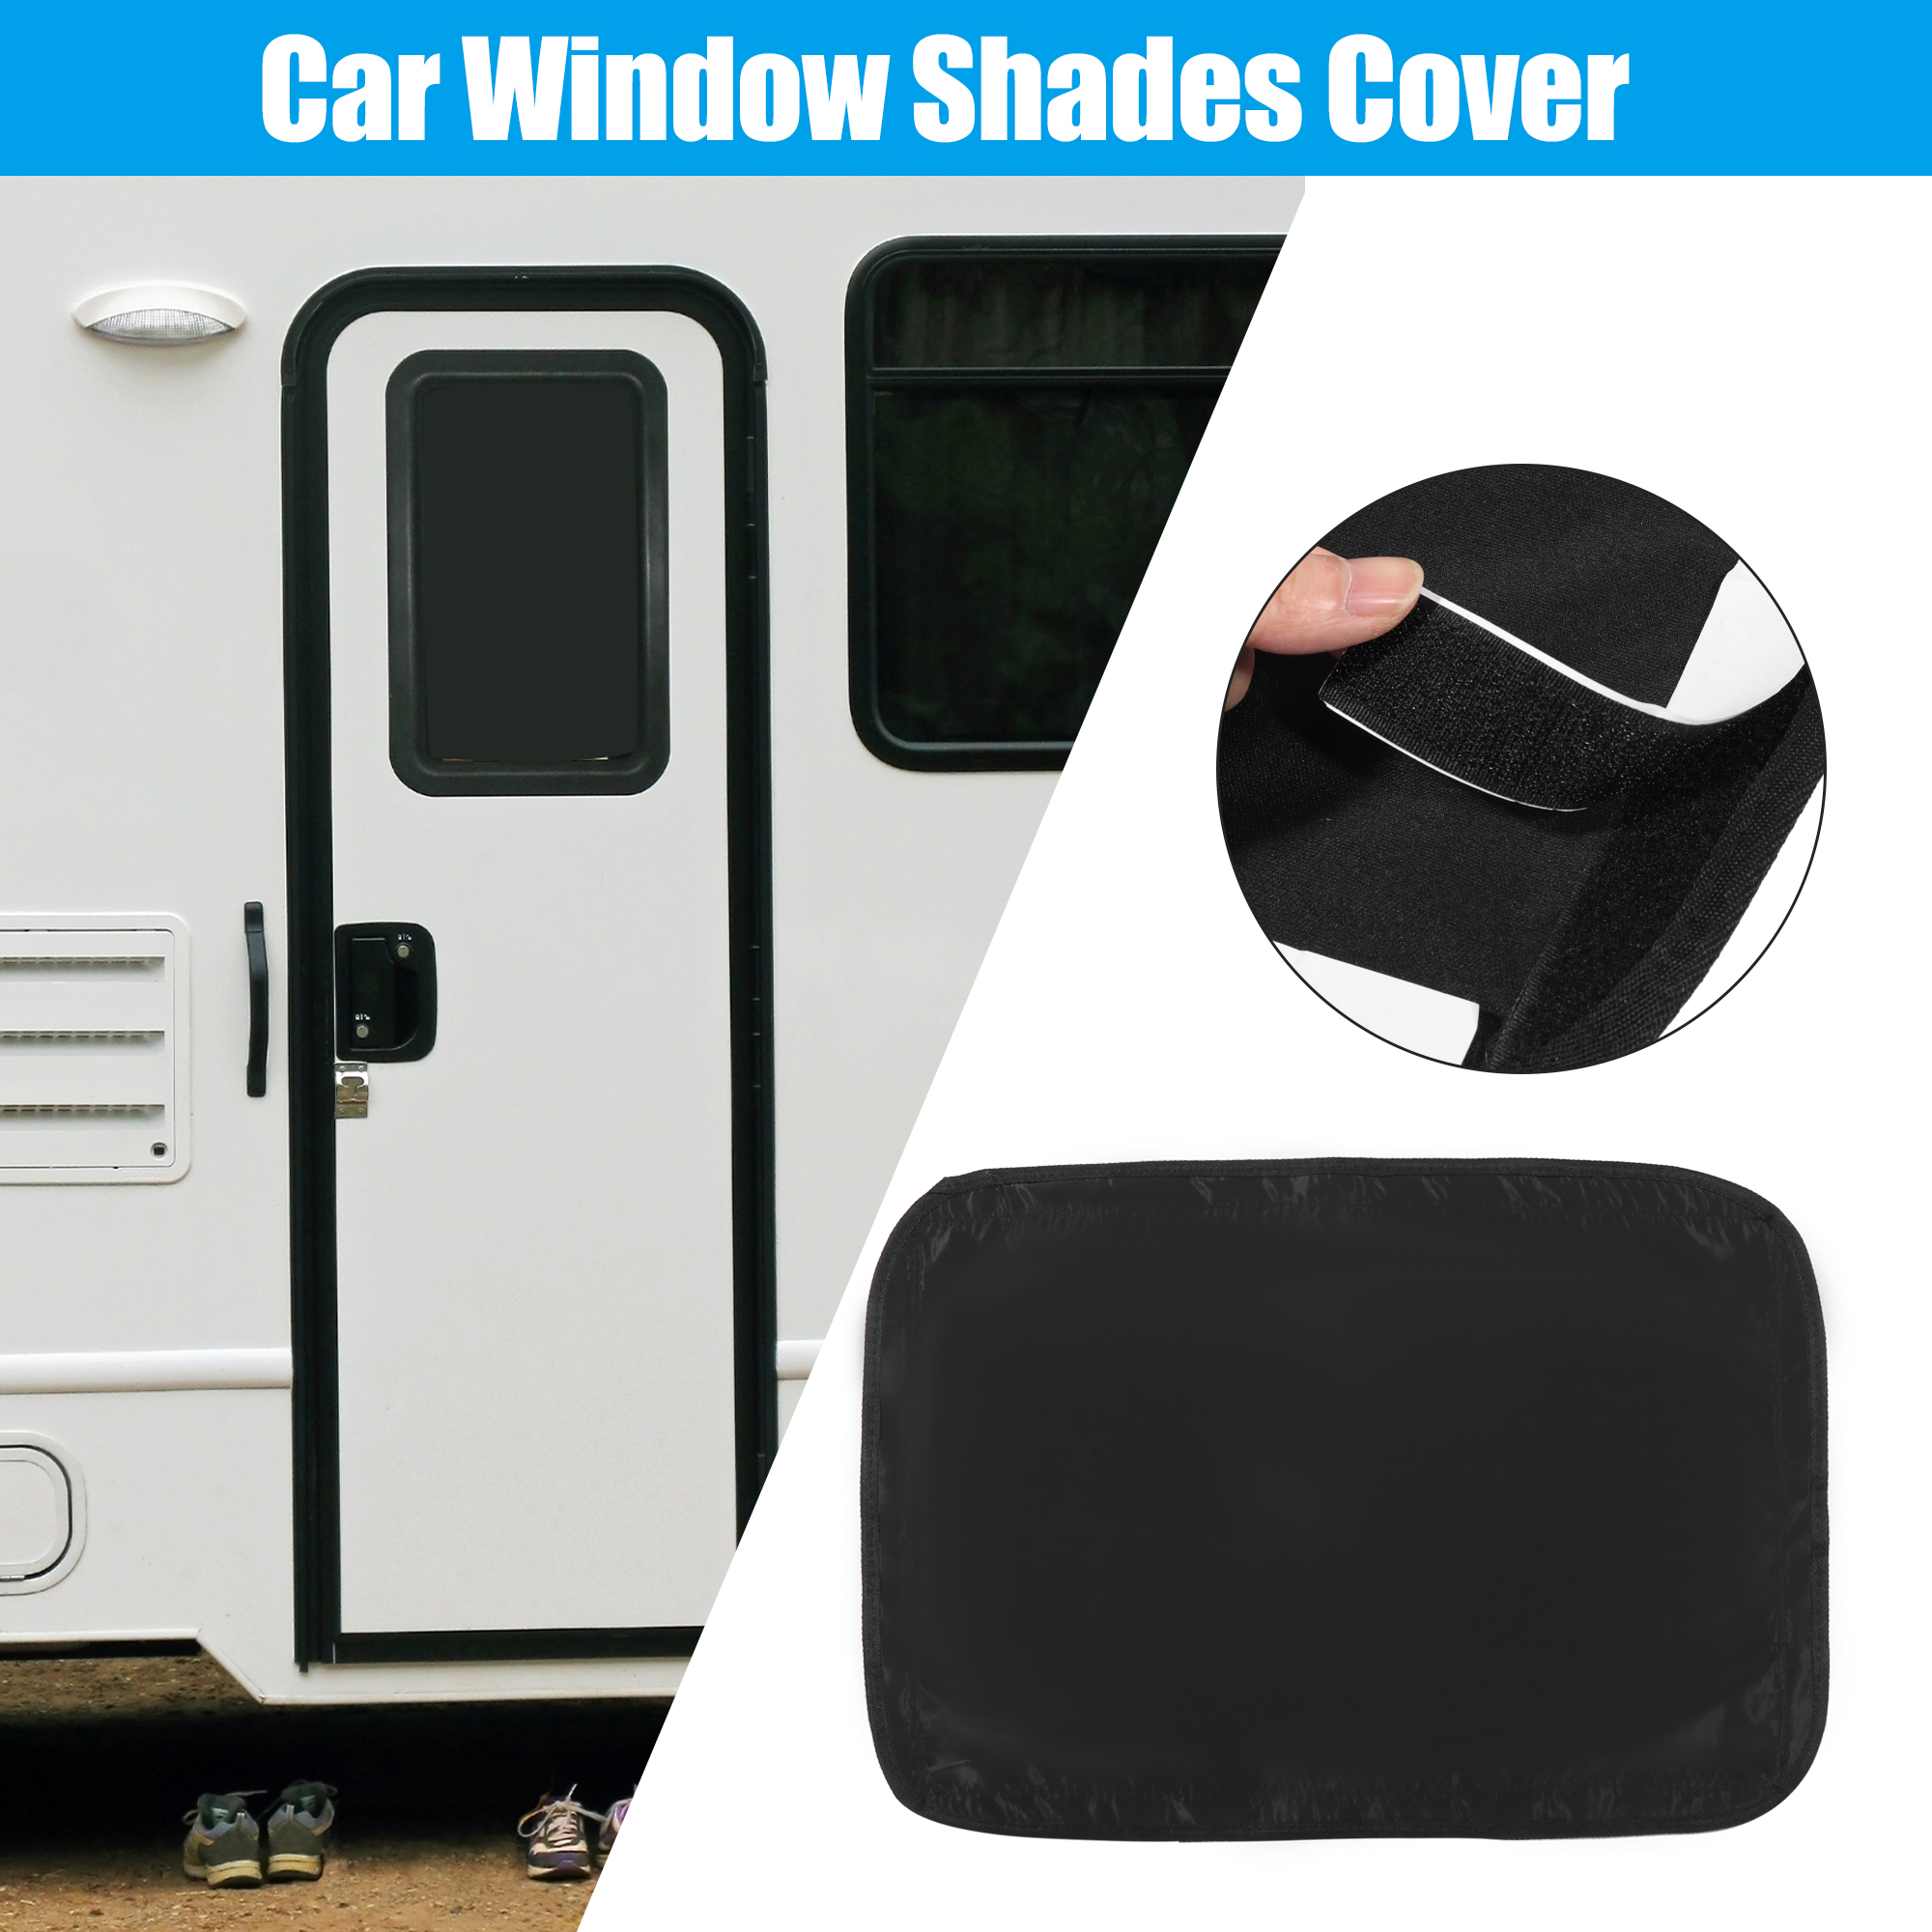 Unique Bargains 1 Set Black 23.23"x16.14" RV Door Shade Cover Window Covers Car Window Shades